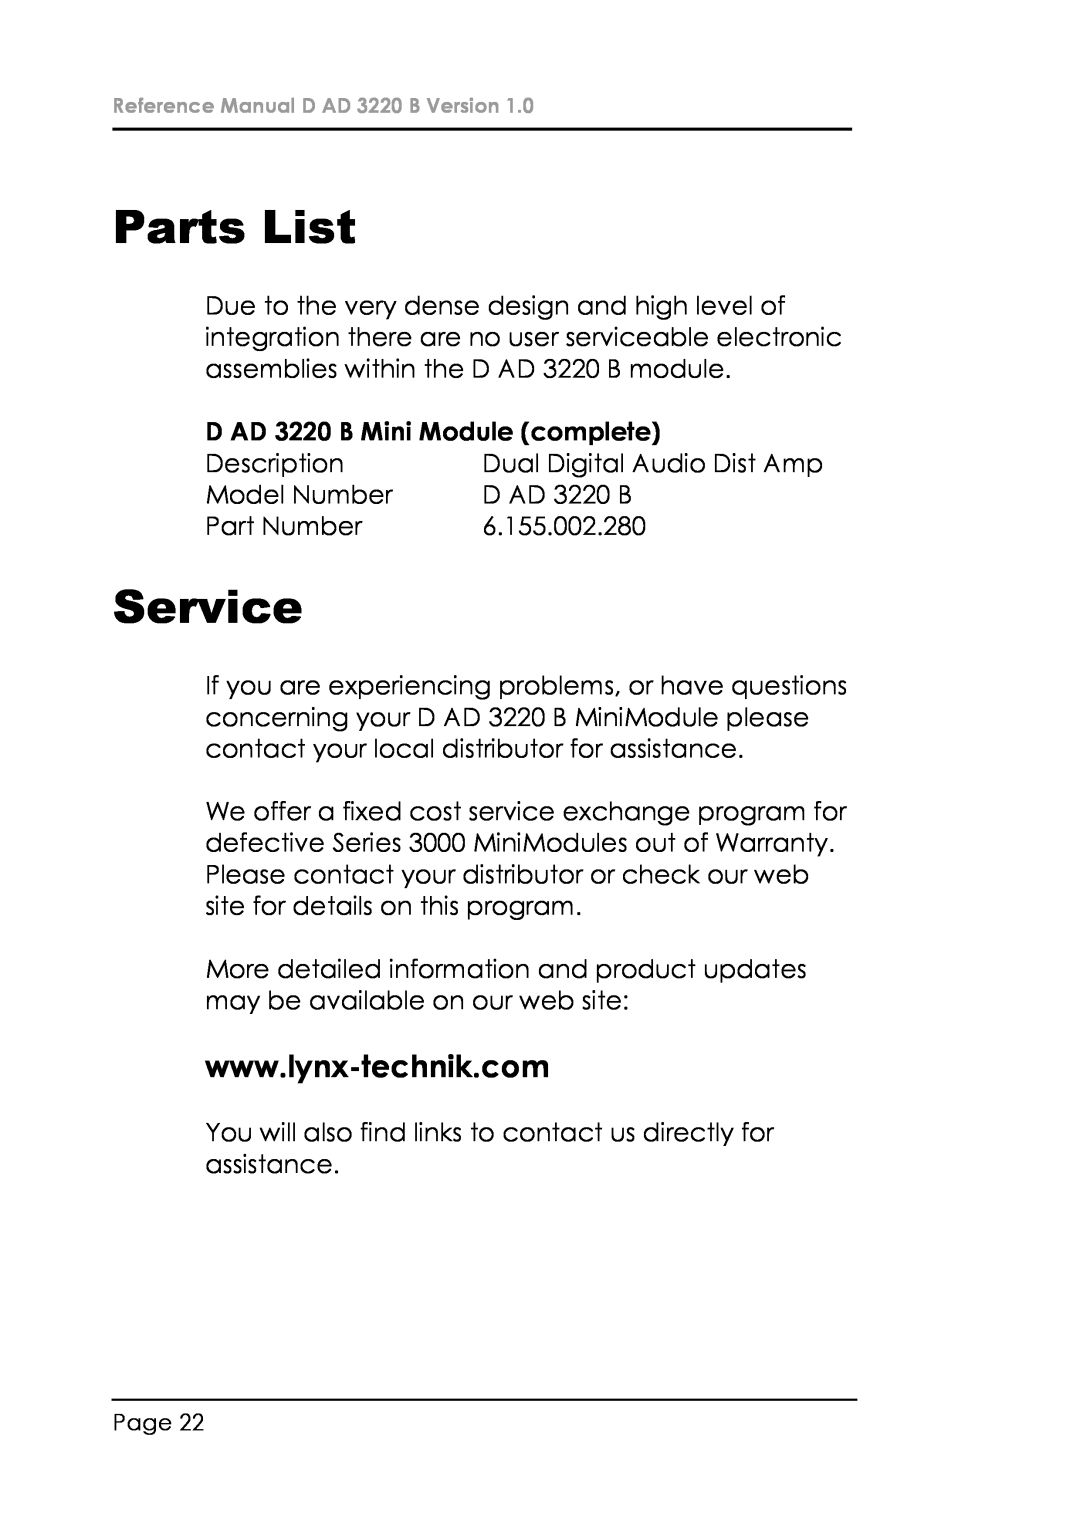 Lynx manual Parts List, Service, D AD 3220 B Mini Module complete 